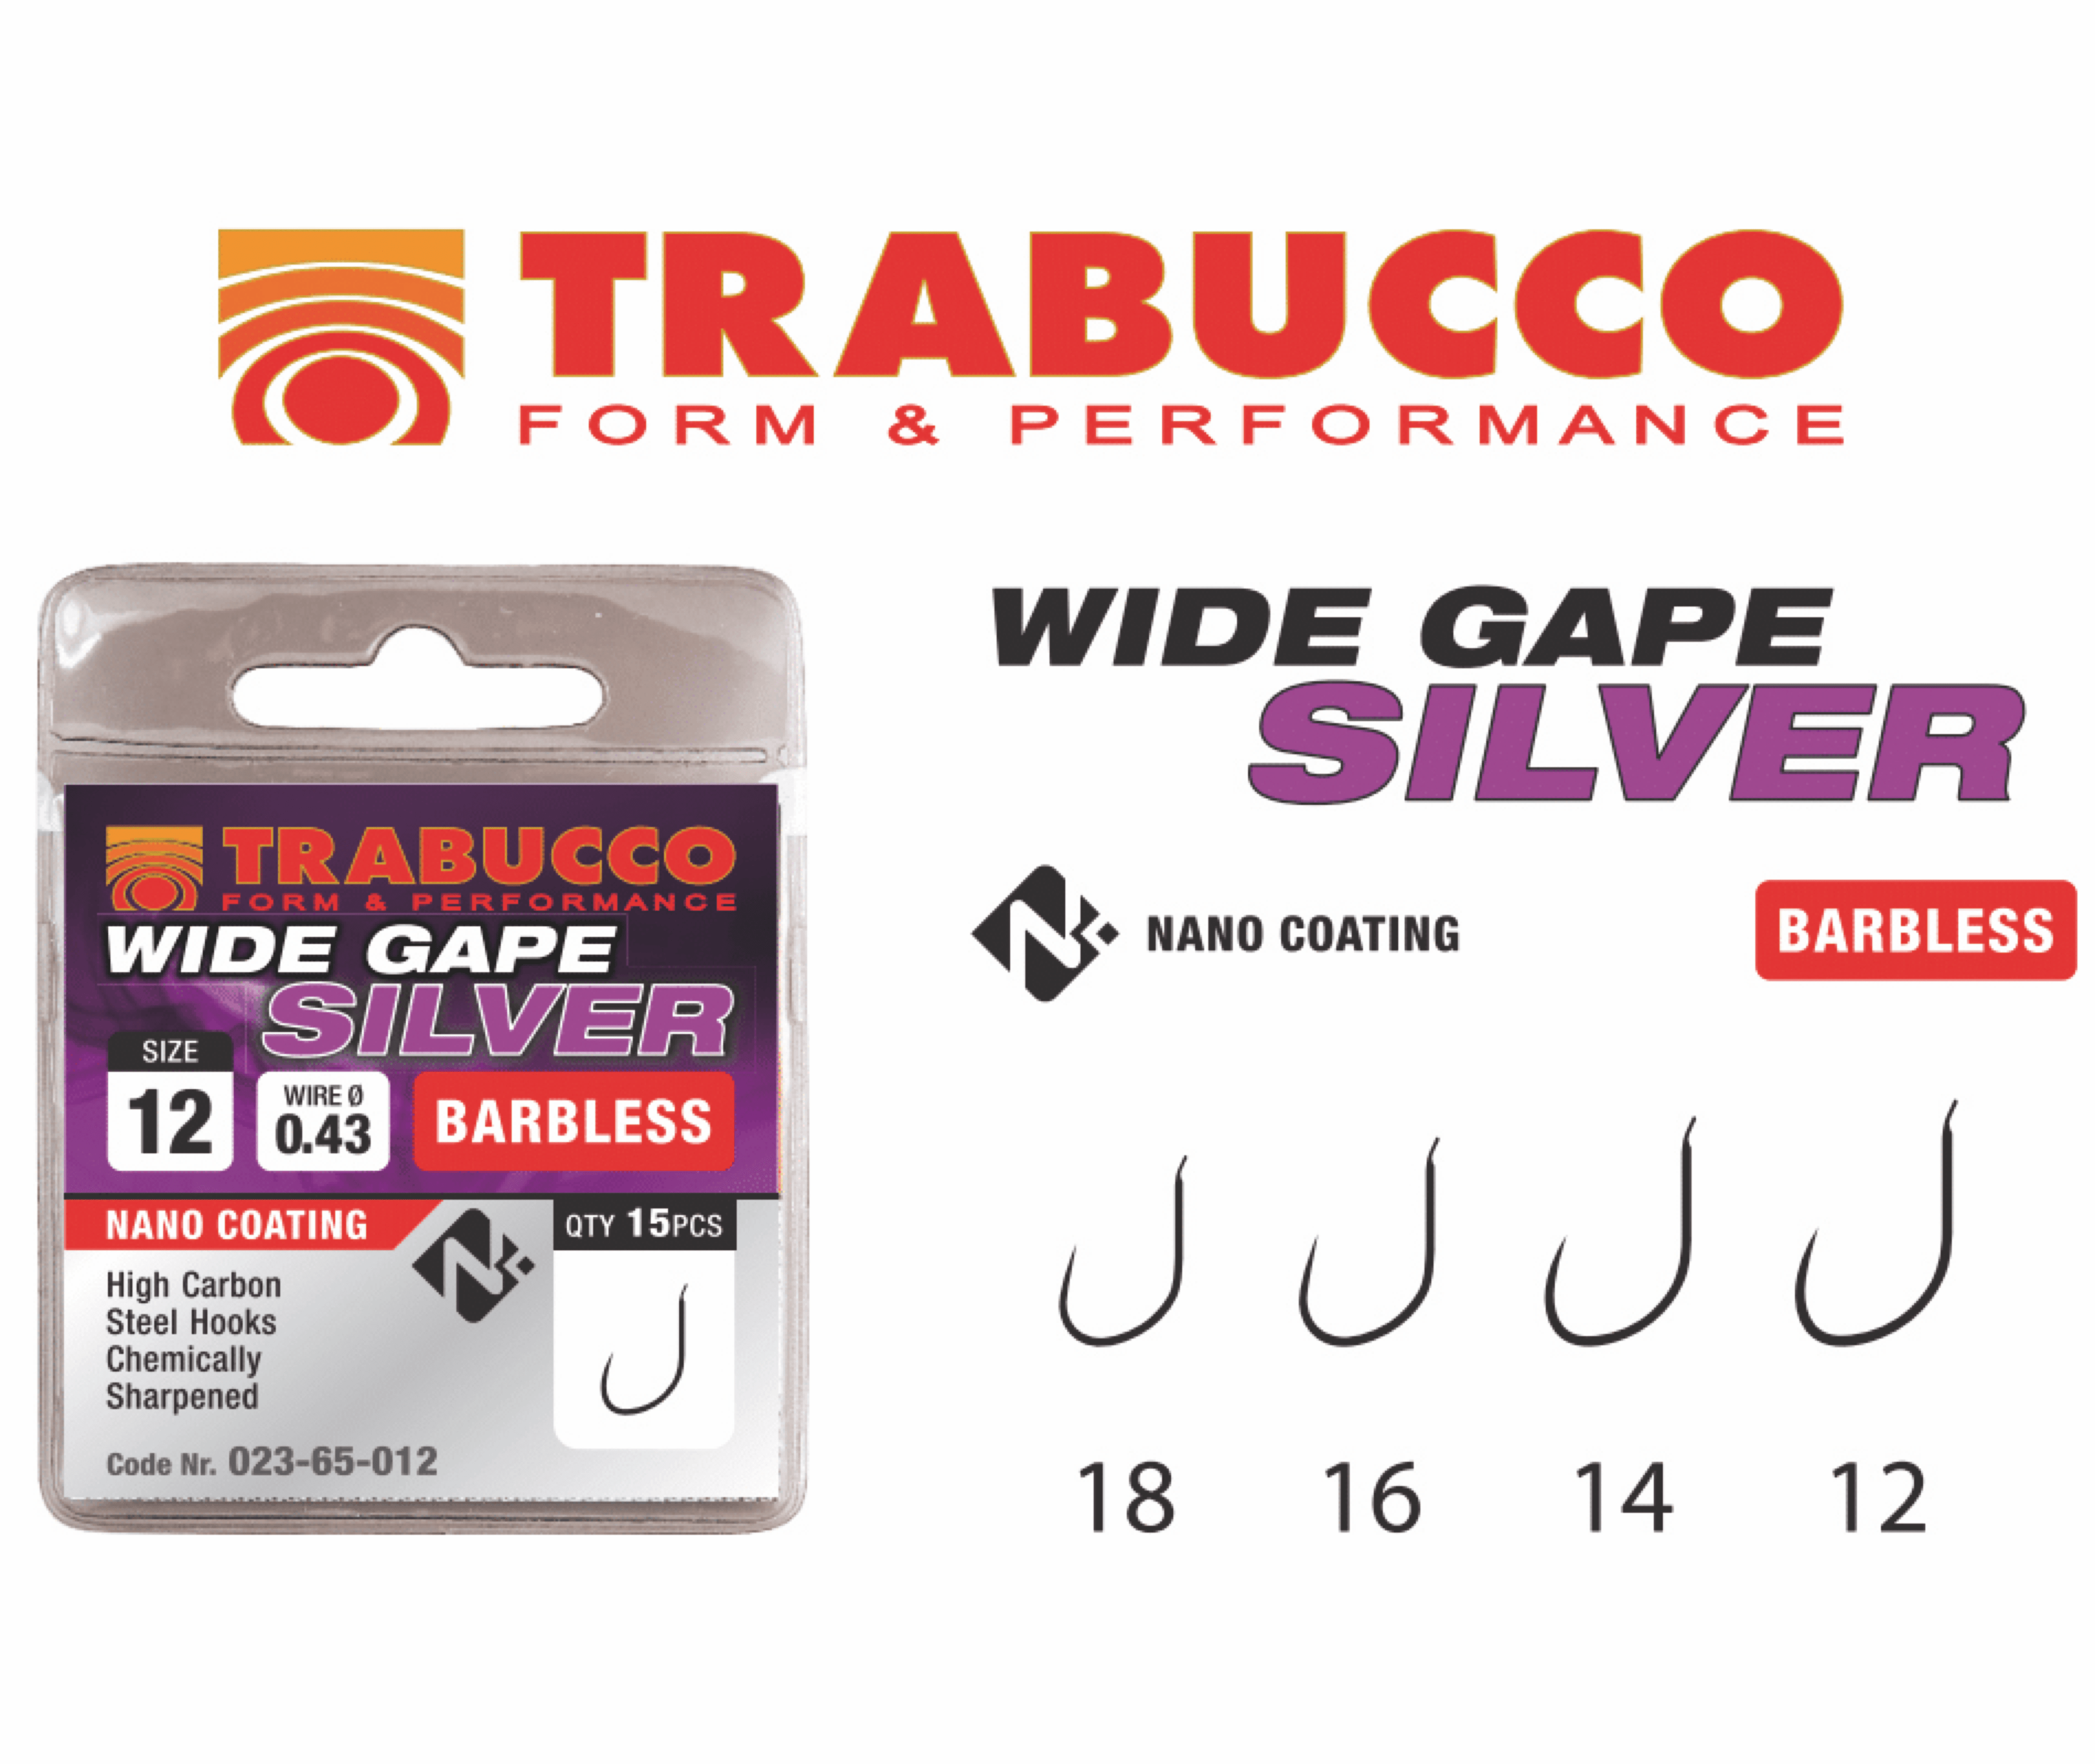 Trabucco wide gape silver